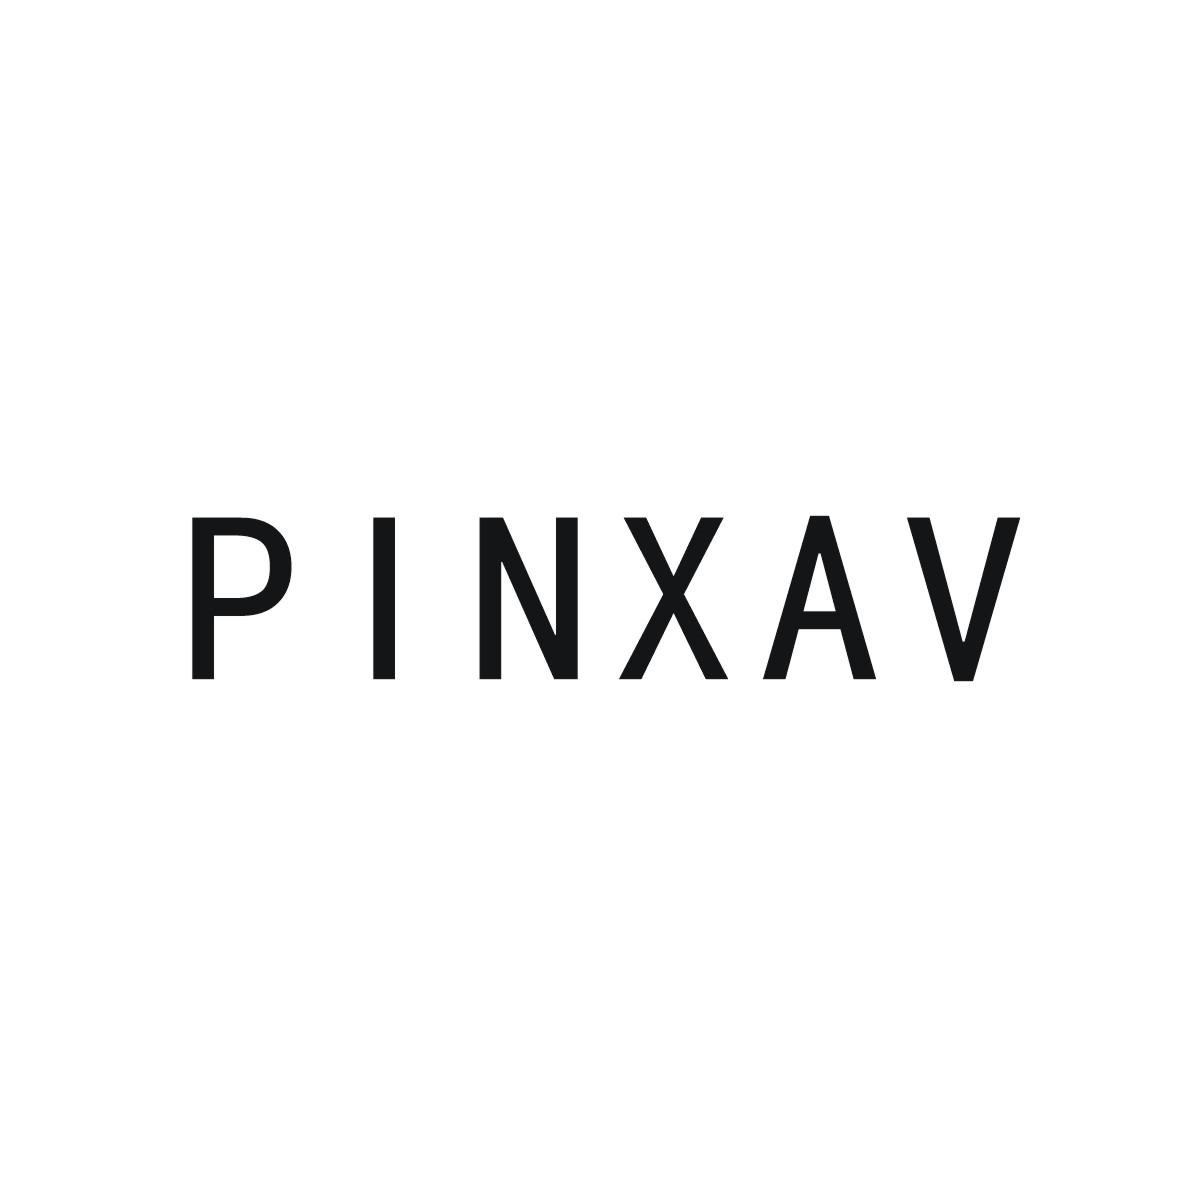 PINXAV止痛药商标转让费用买卖交易流程